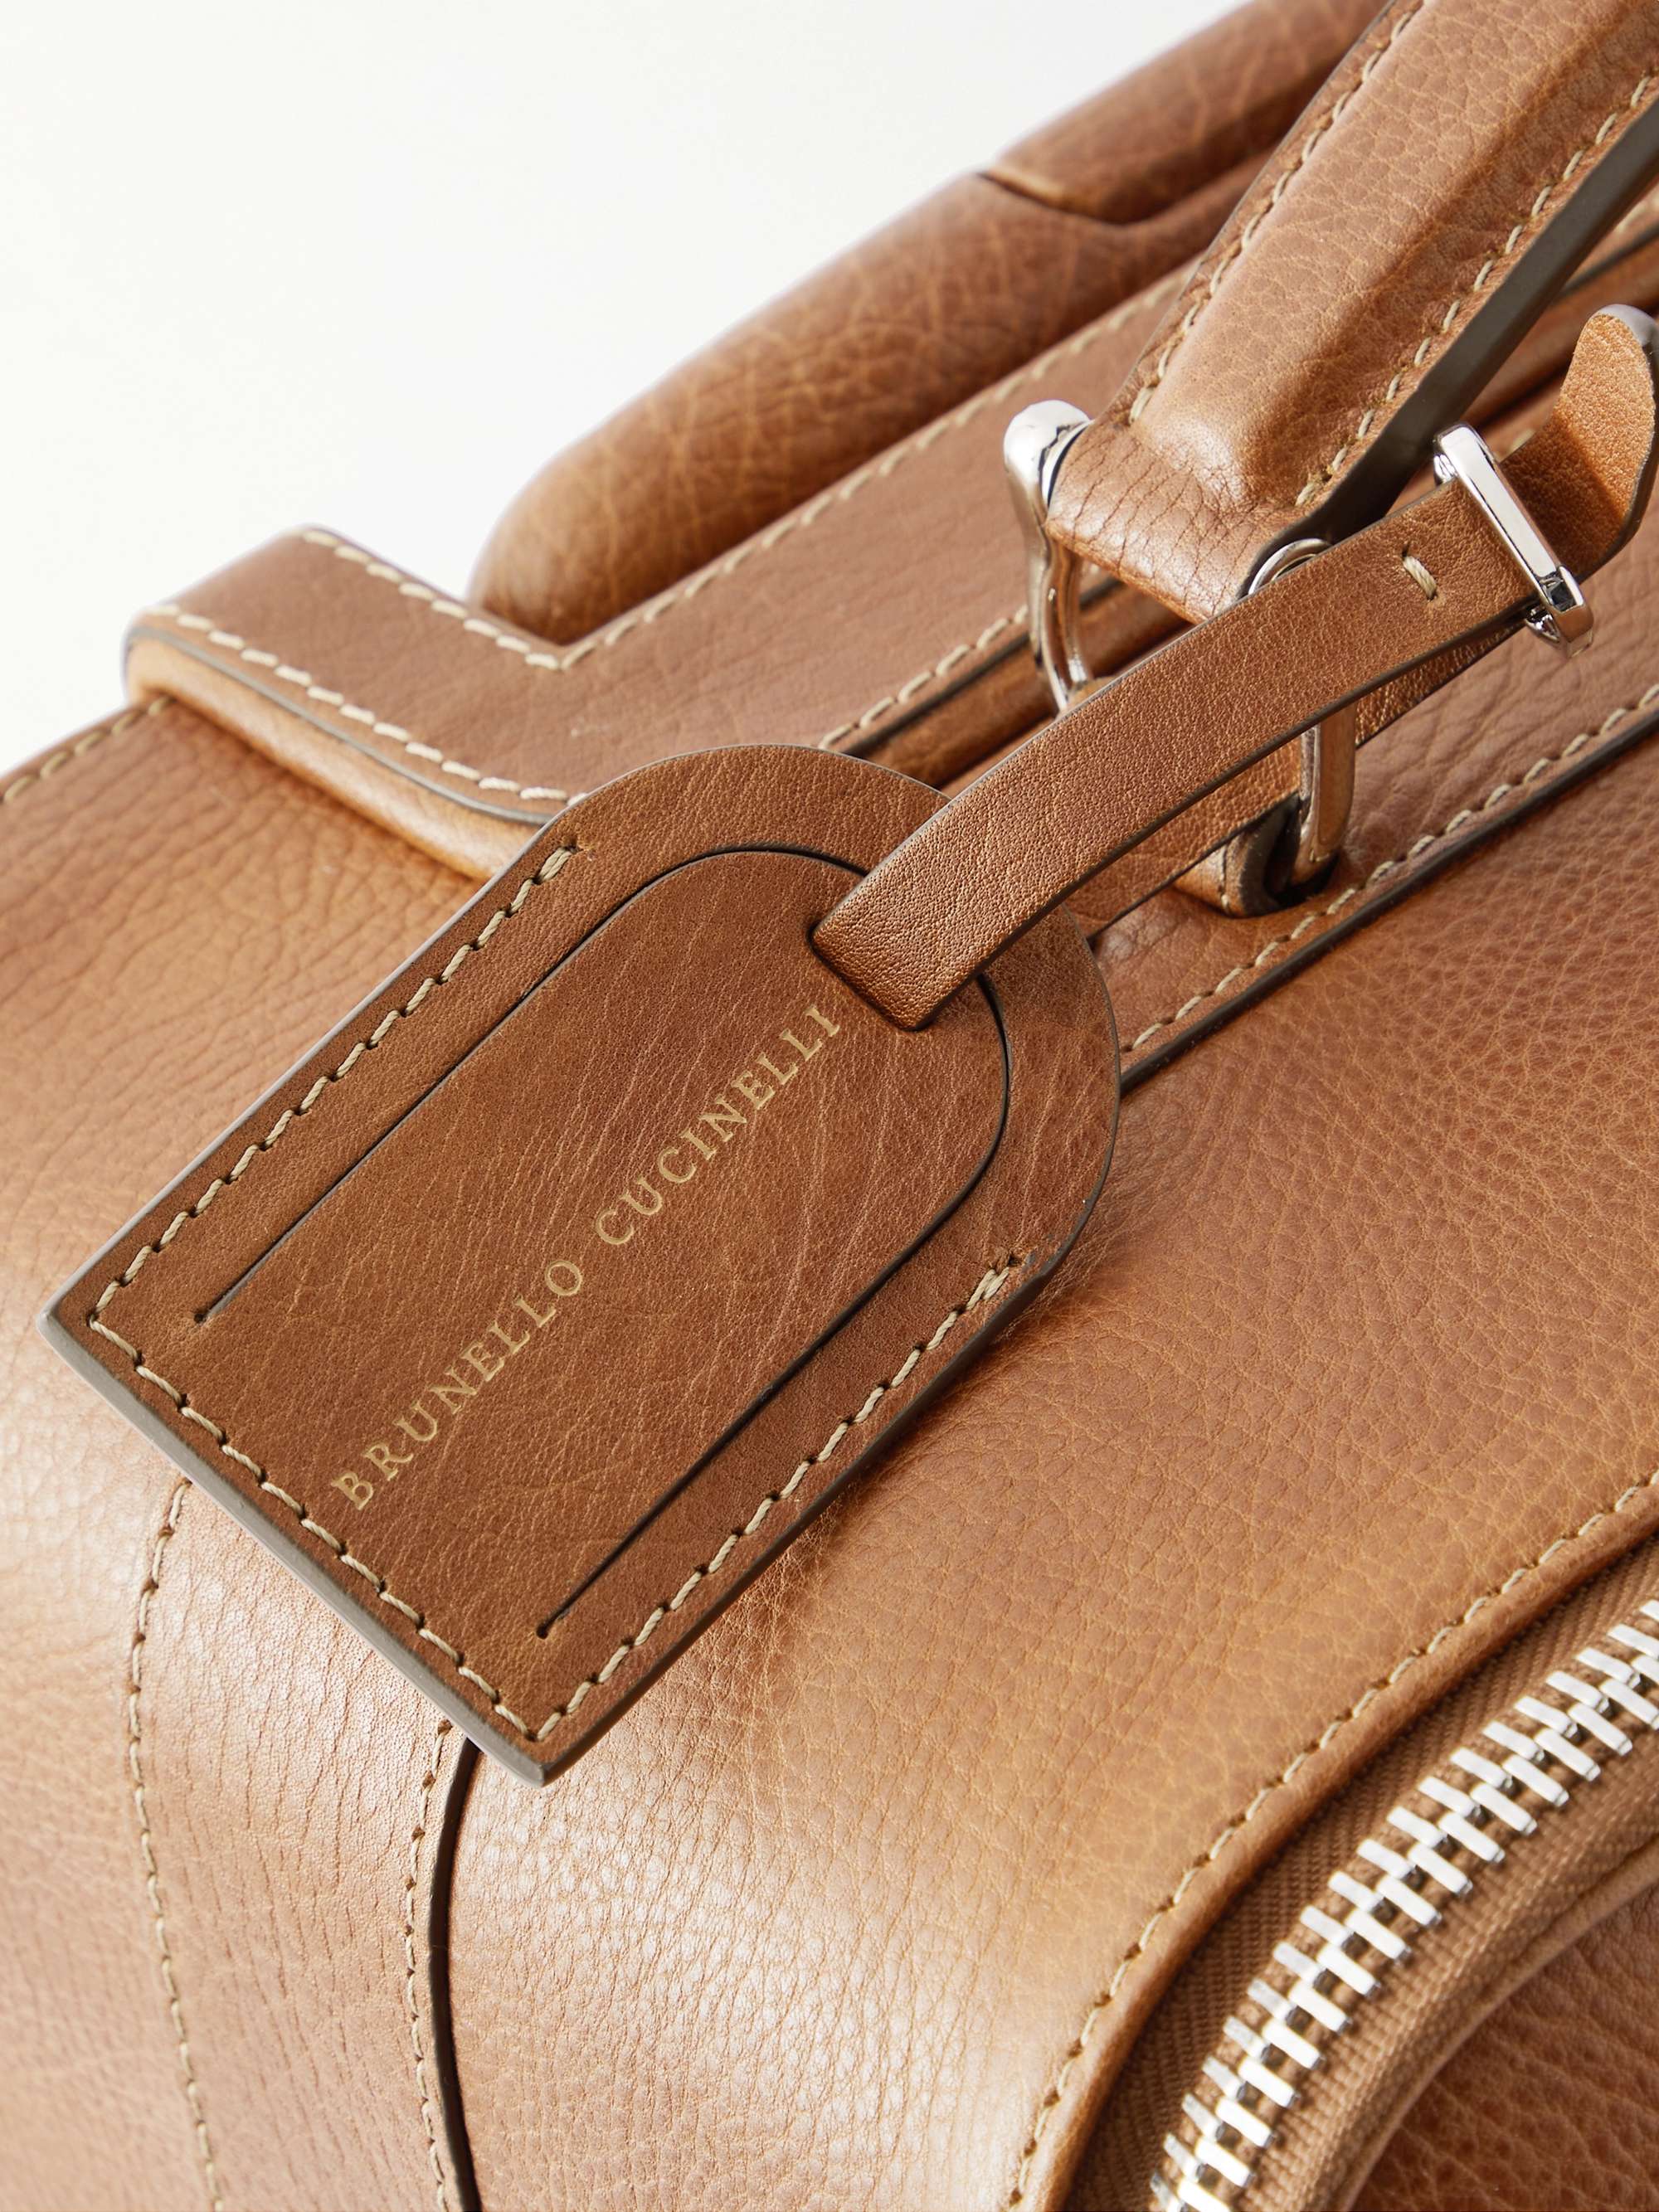 BRUNELLO CUCINELLI Full-Grain Leather Suitcase